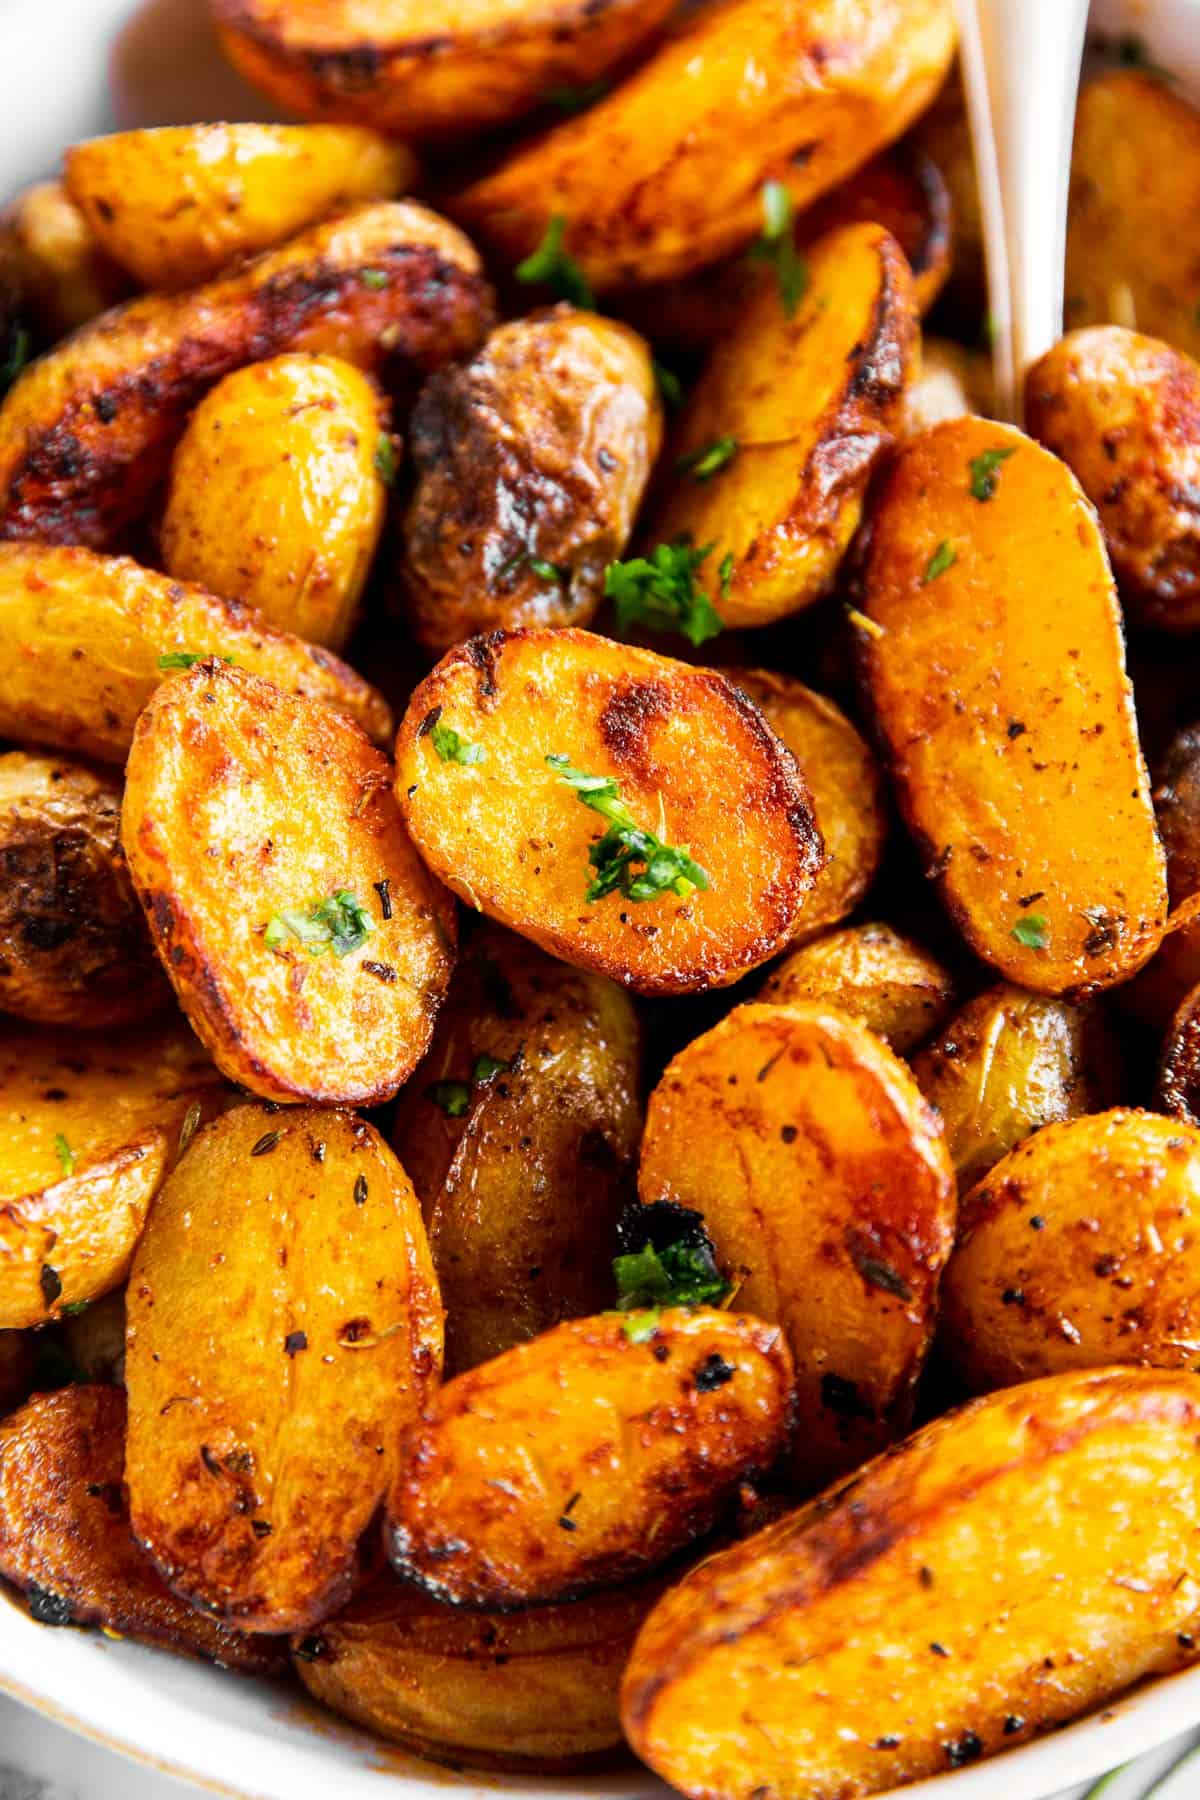 https://www.savorynothings.com/wp-content/uploads/2021/04/roasted-baby-potatoes-image-7.jpg